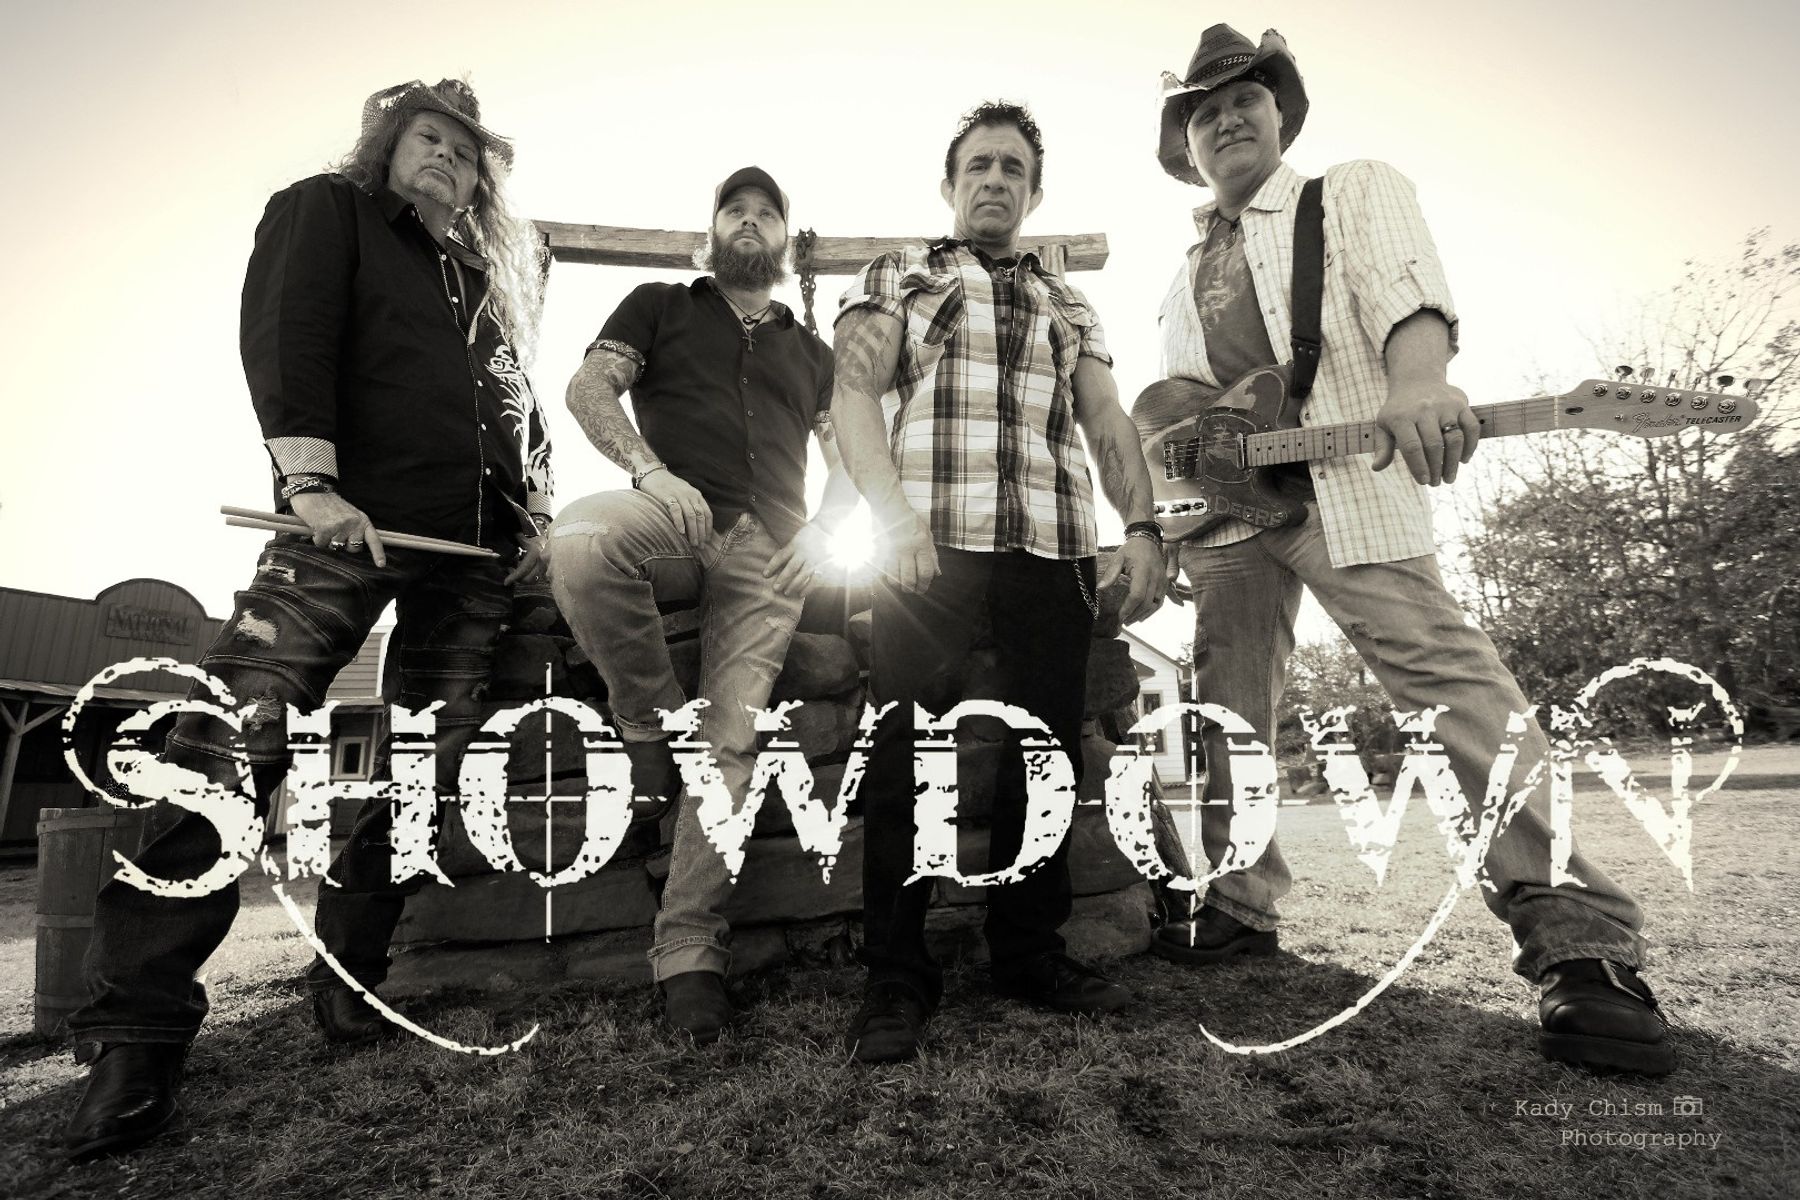 The Showdown (band) - Wikipedia